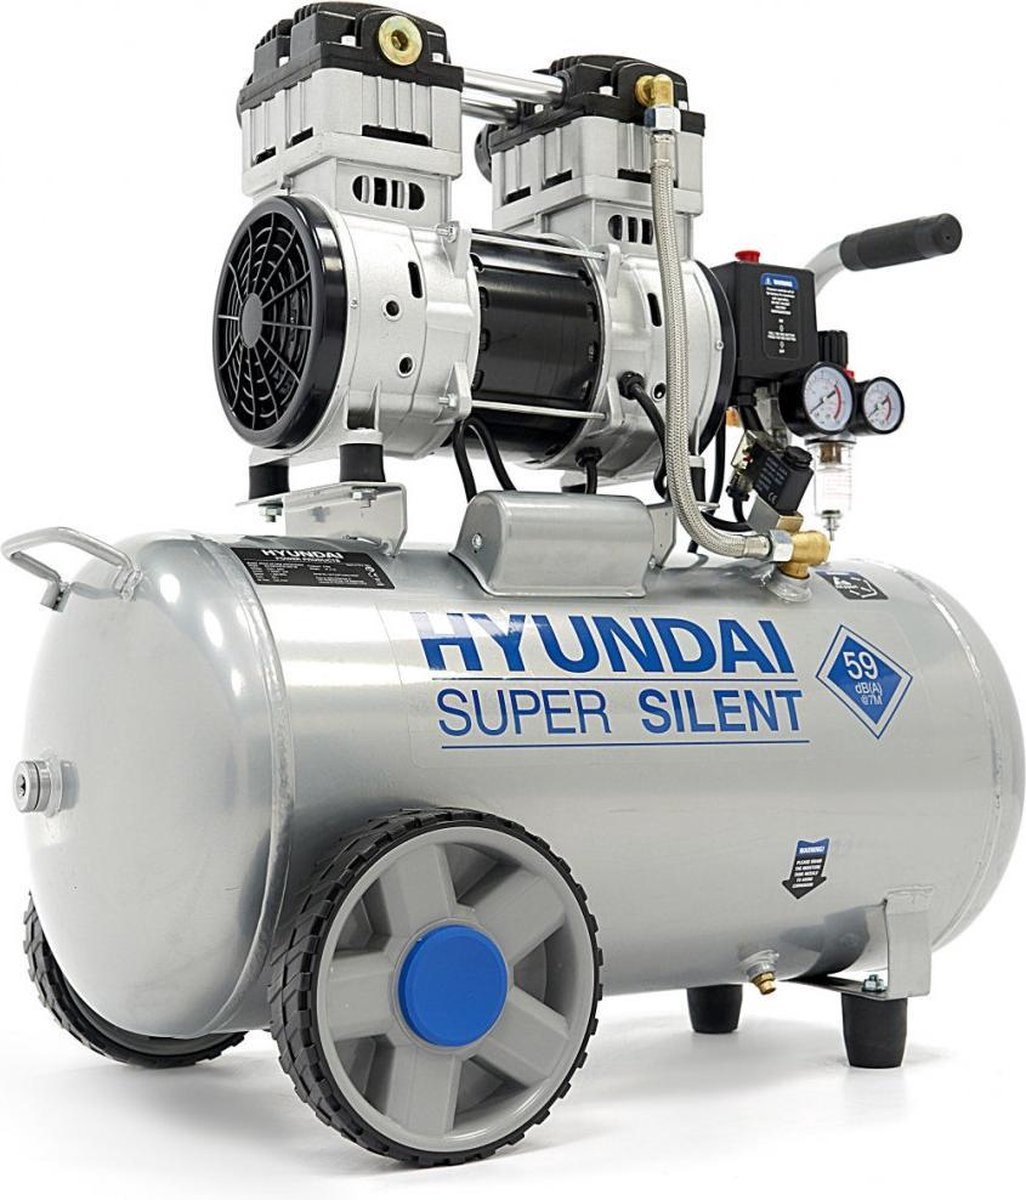 Hyundai 50 Liter Professionele Low Noise Compressor